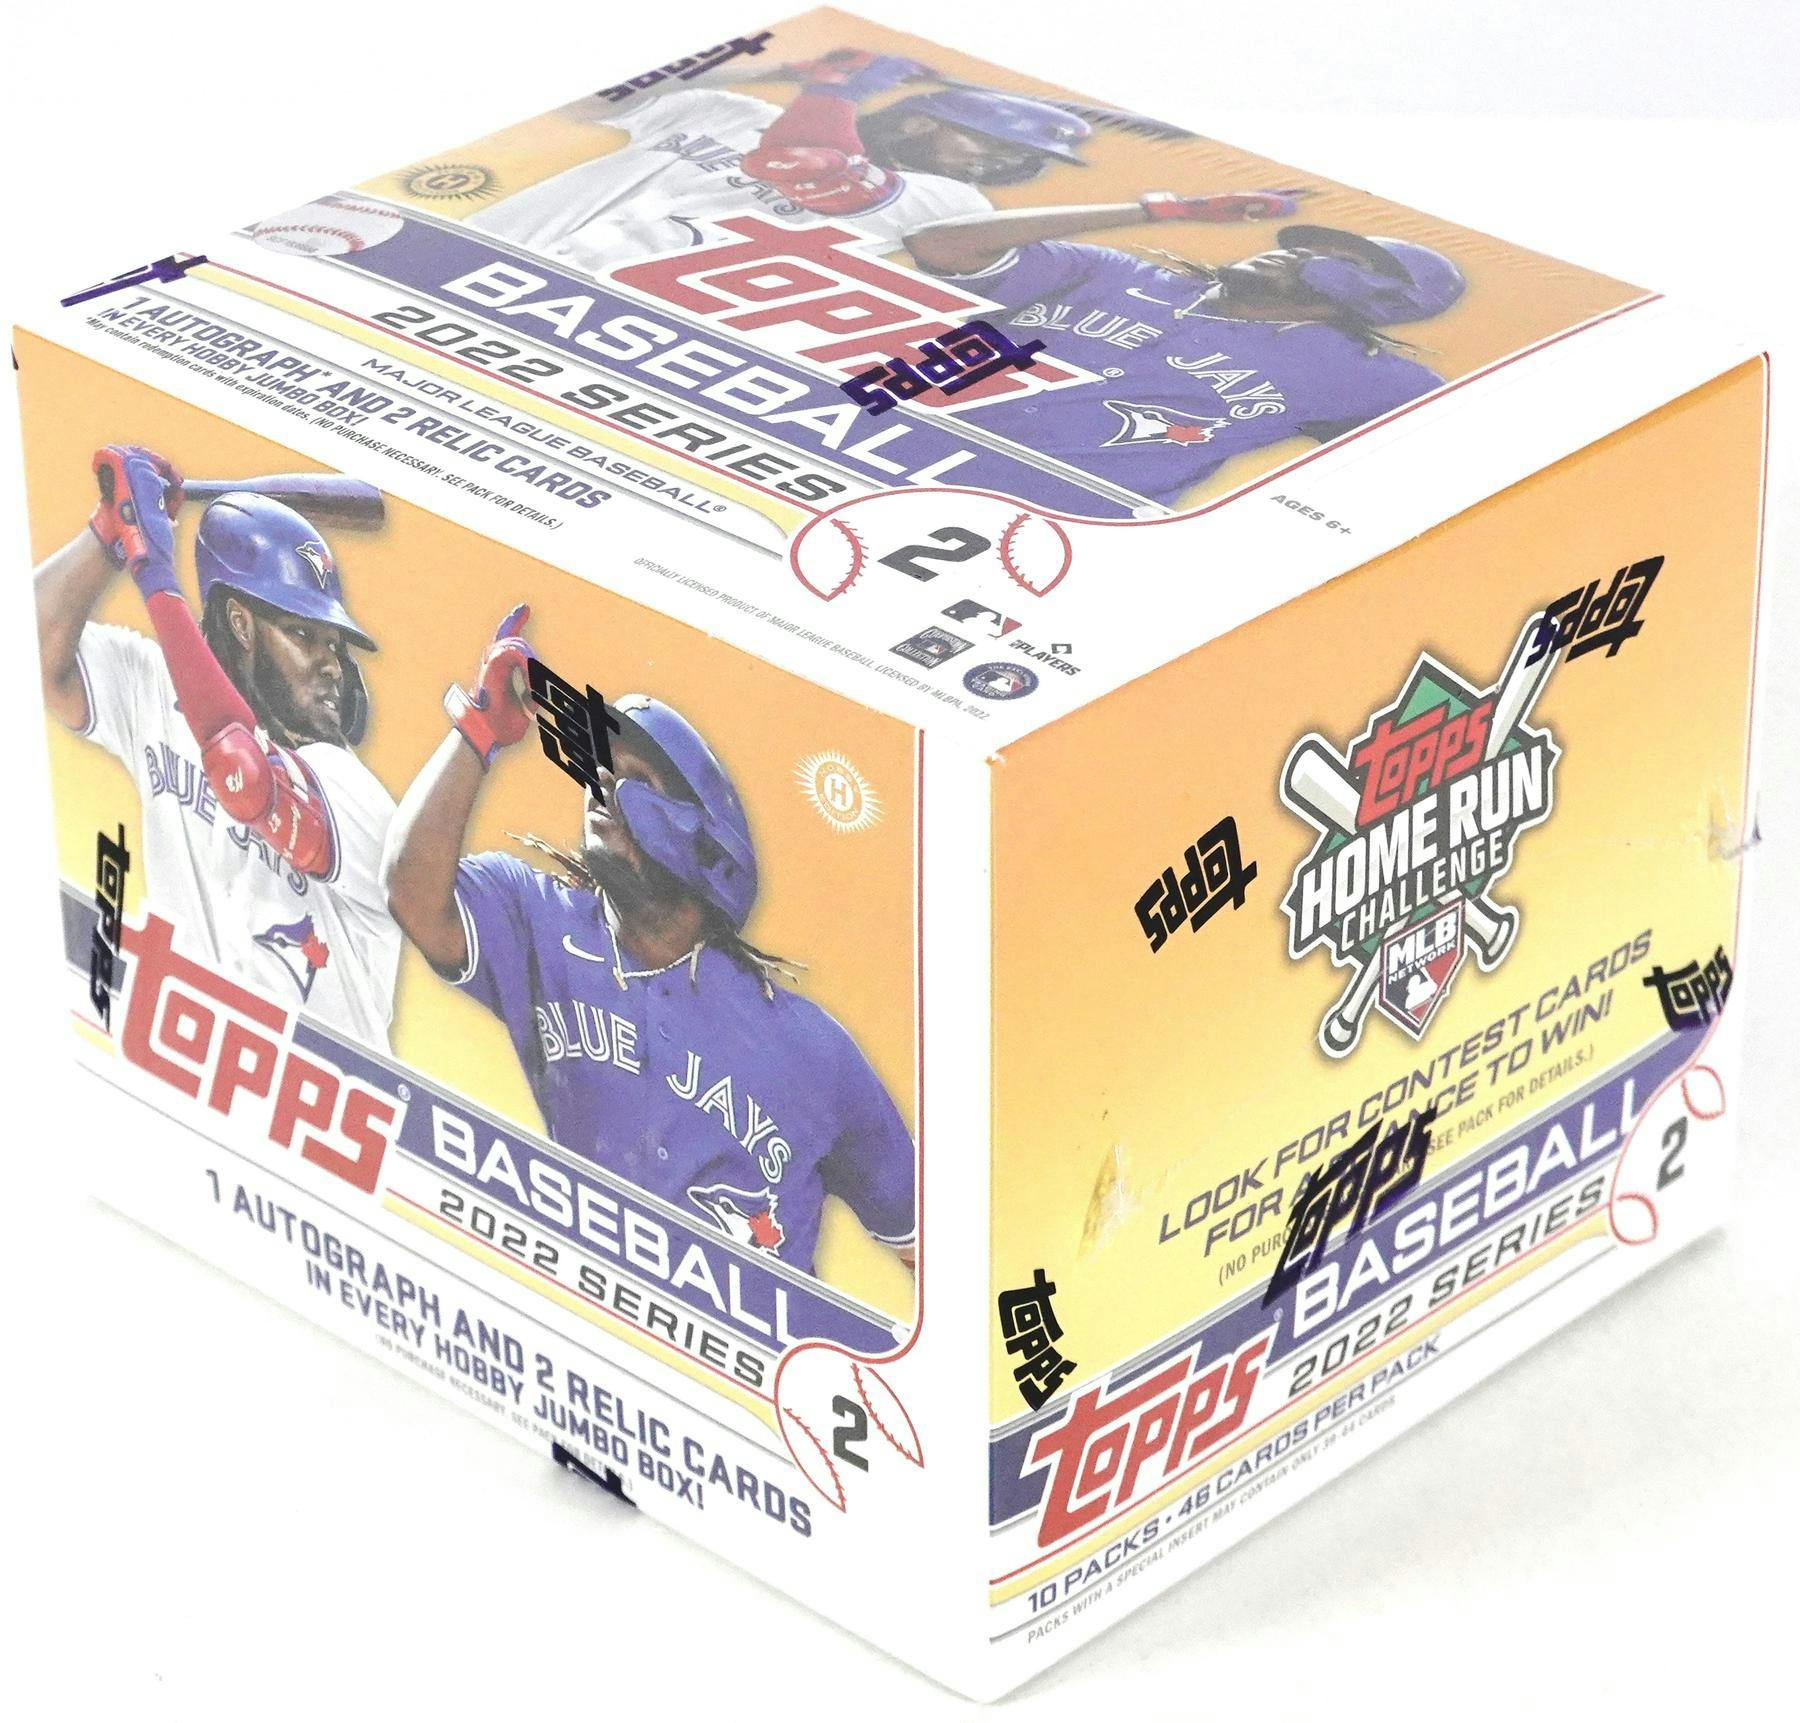 2022 Topps Series 2 Baseball Hobby Jumbo Box DA Card World